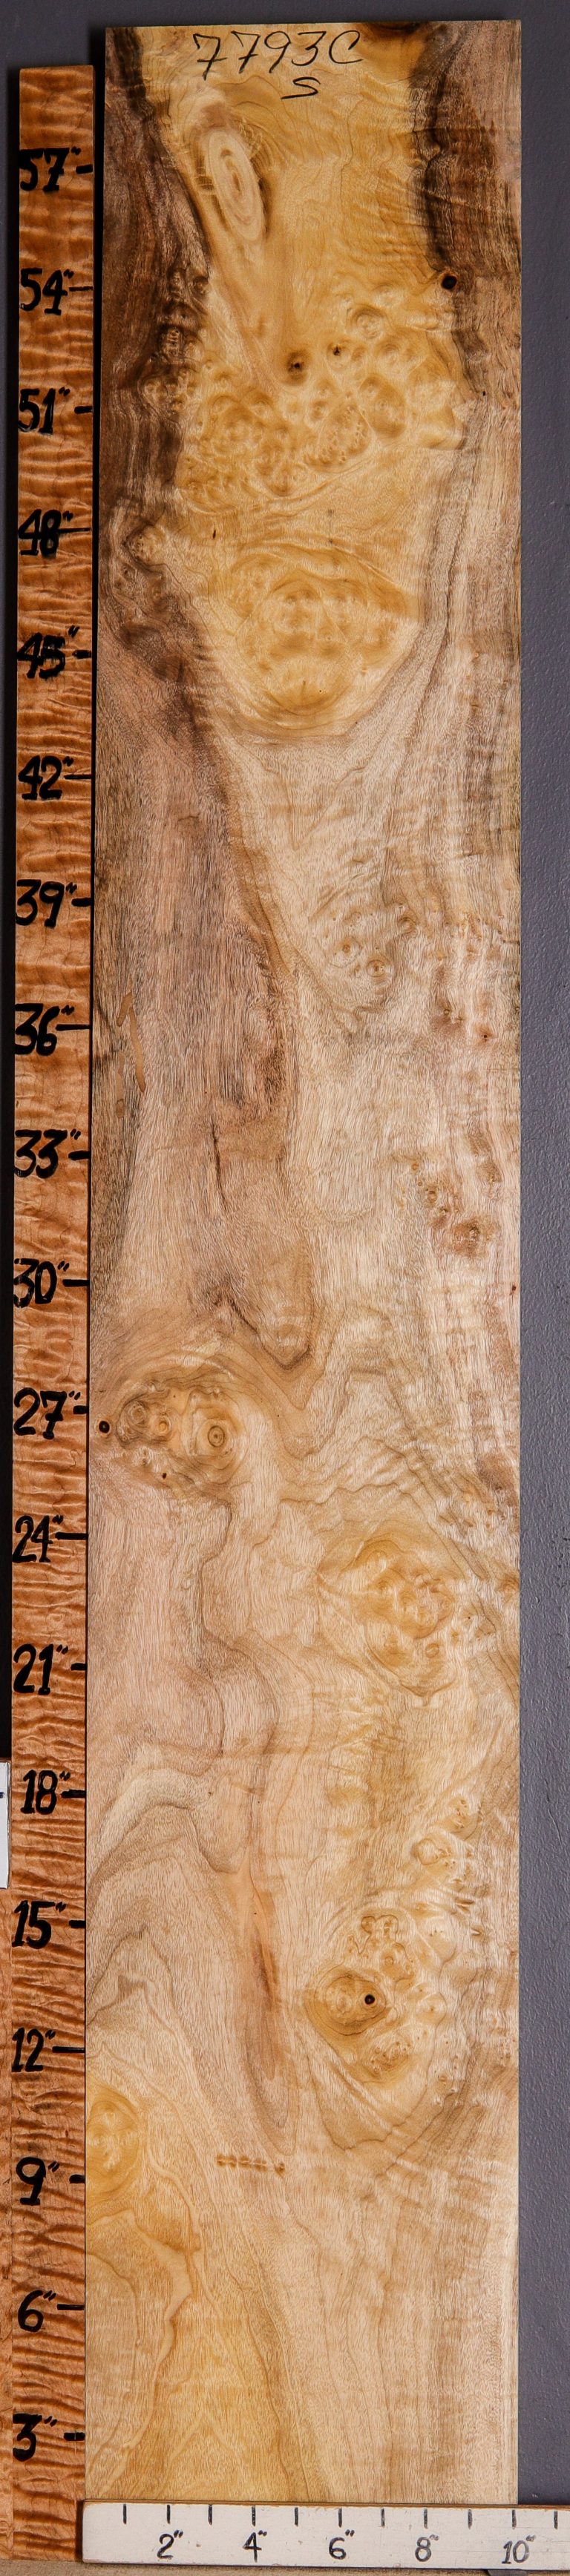 5A Striped Myrtlewood Lumber 10" X 60" X 4/4 (NWT-7793C)